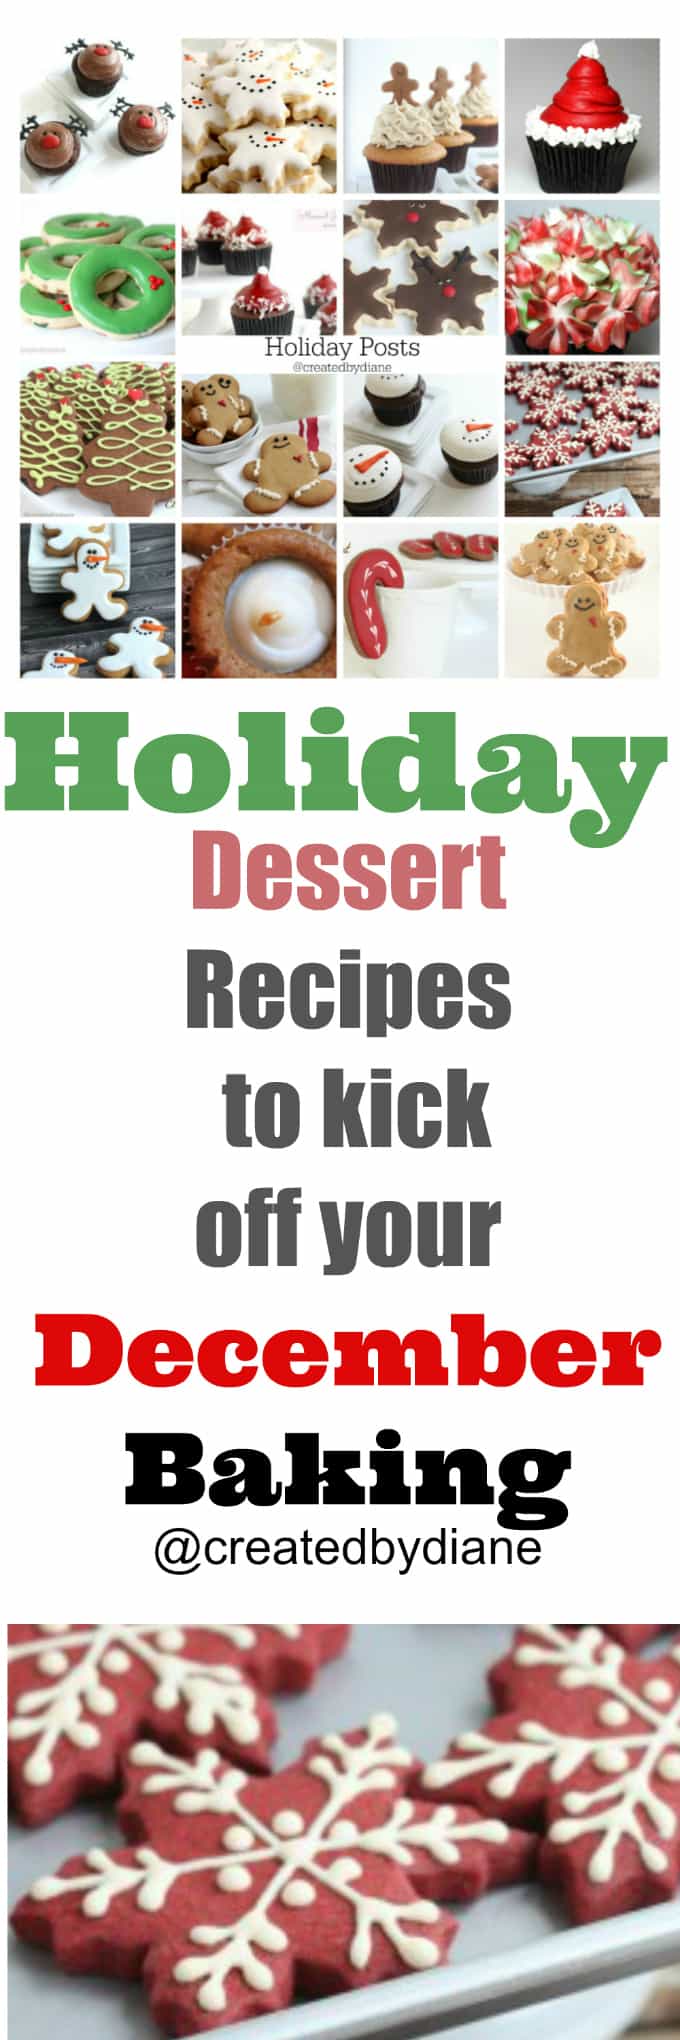 holiday-dessert-recipes-createdbydiane